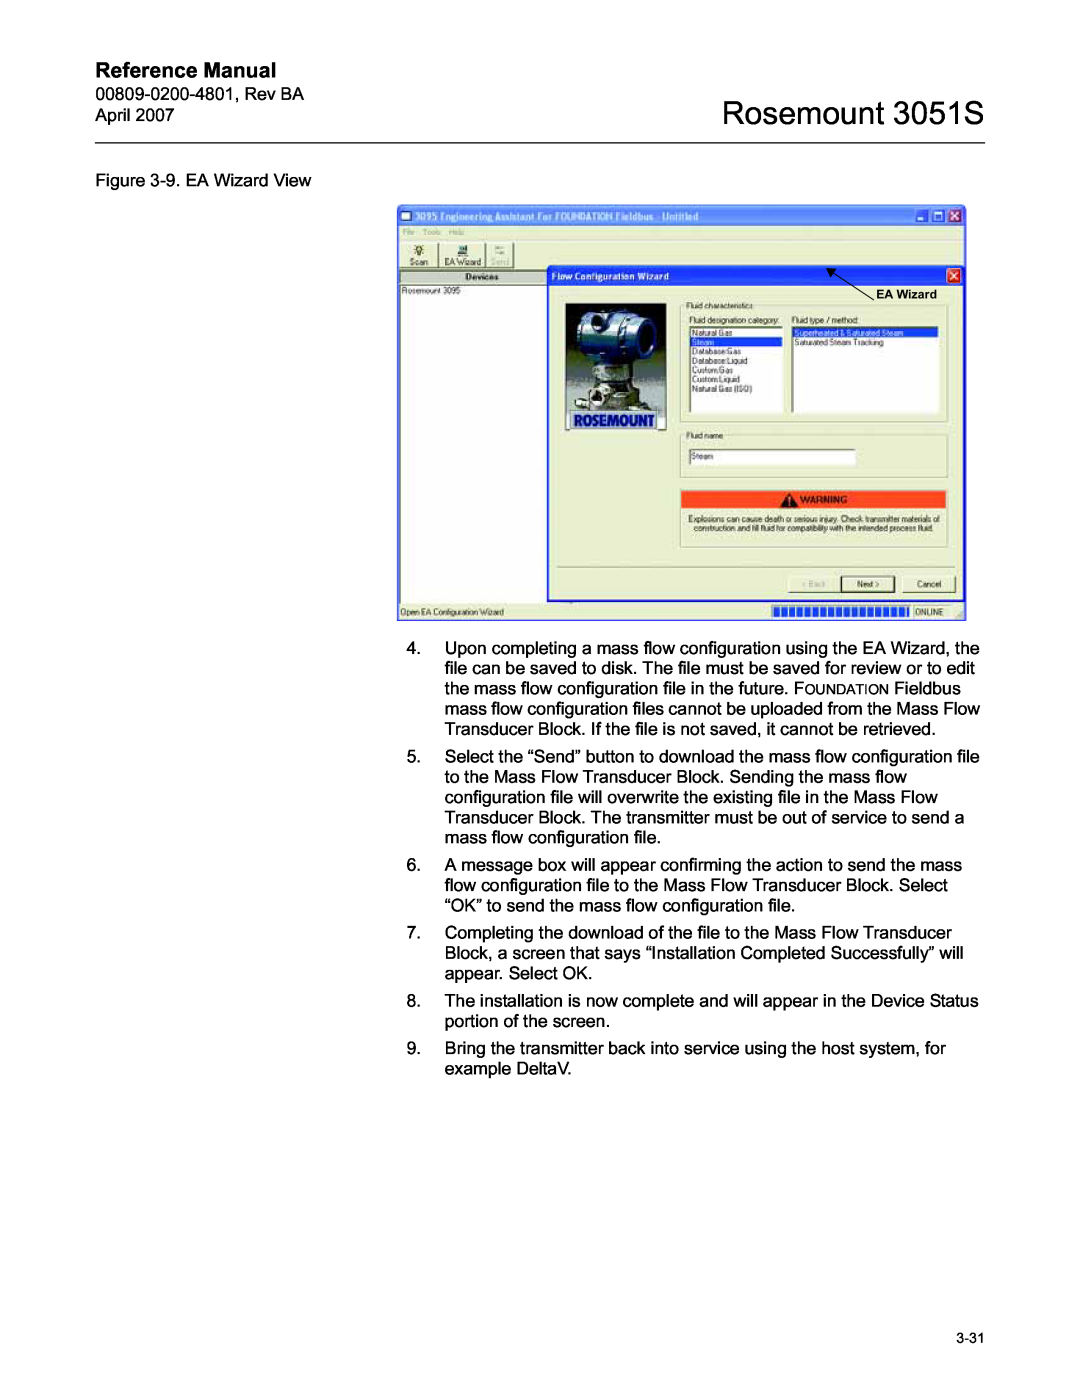 Emerson manual Rosemount 3051S, Reference Manual, EA Wizard 